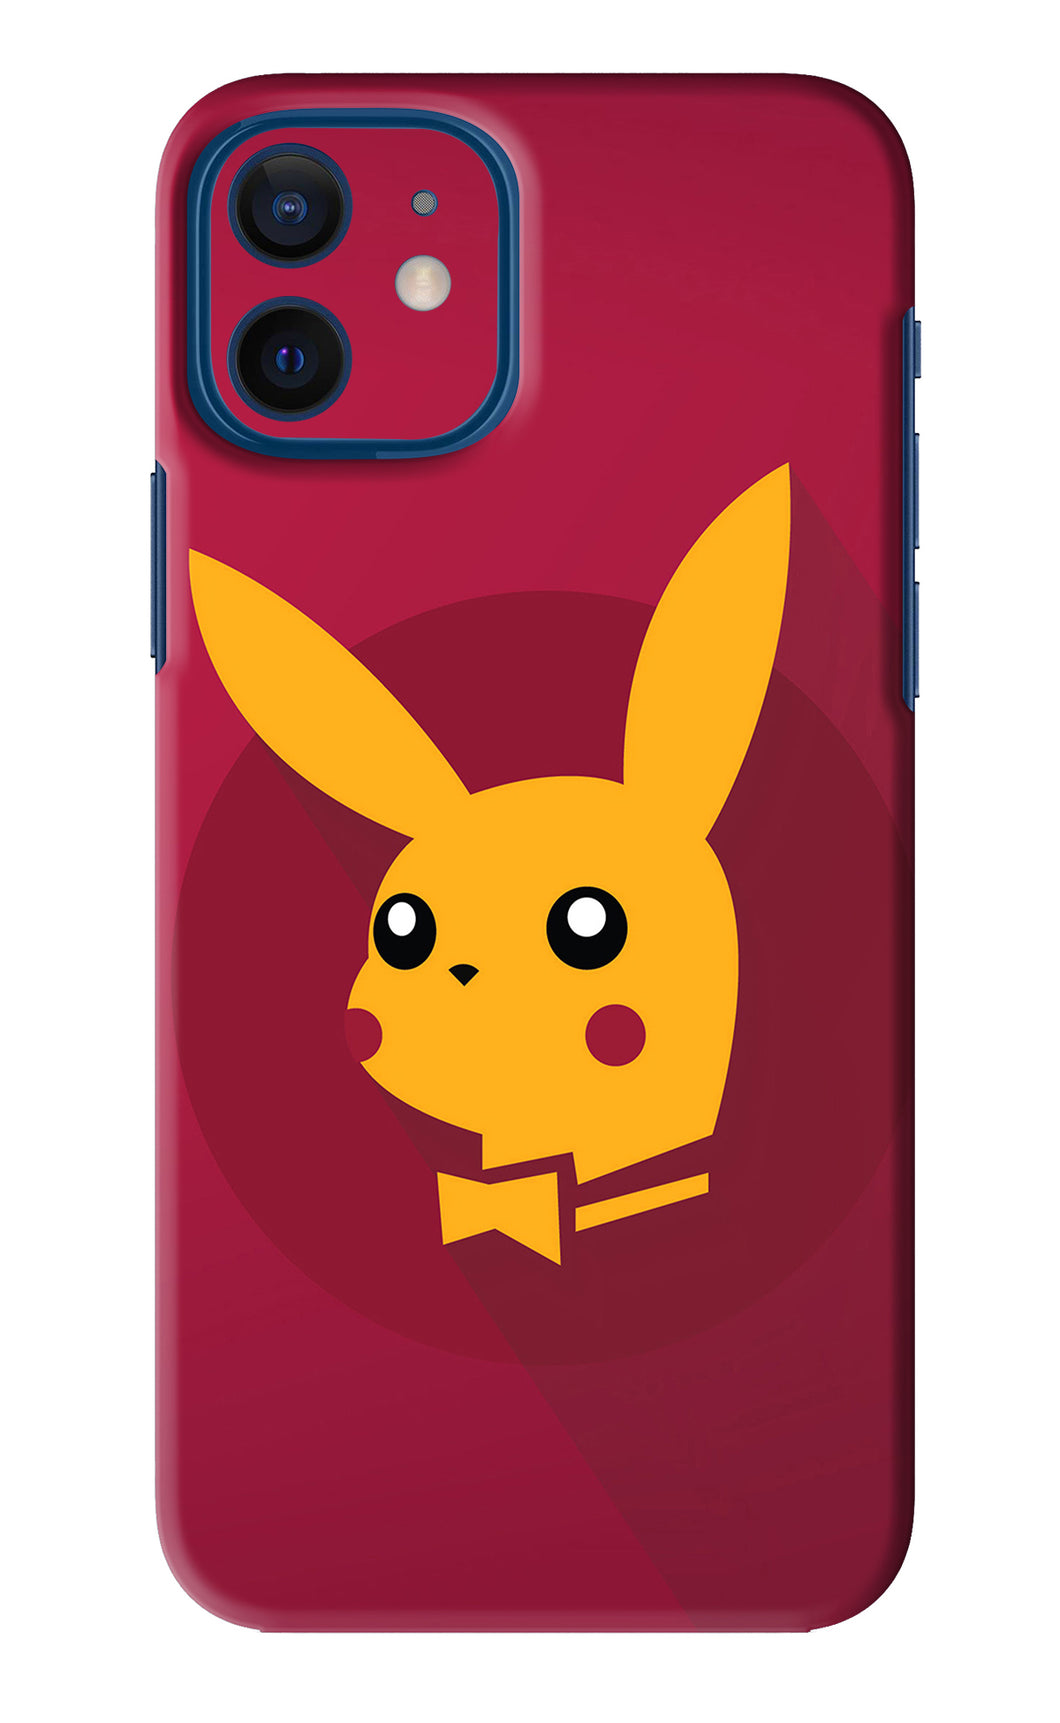 Pikachu iPhone 12 Back Skin Wrap